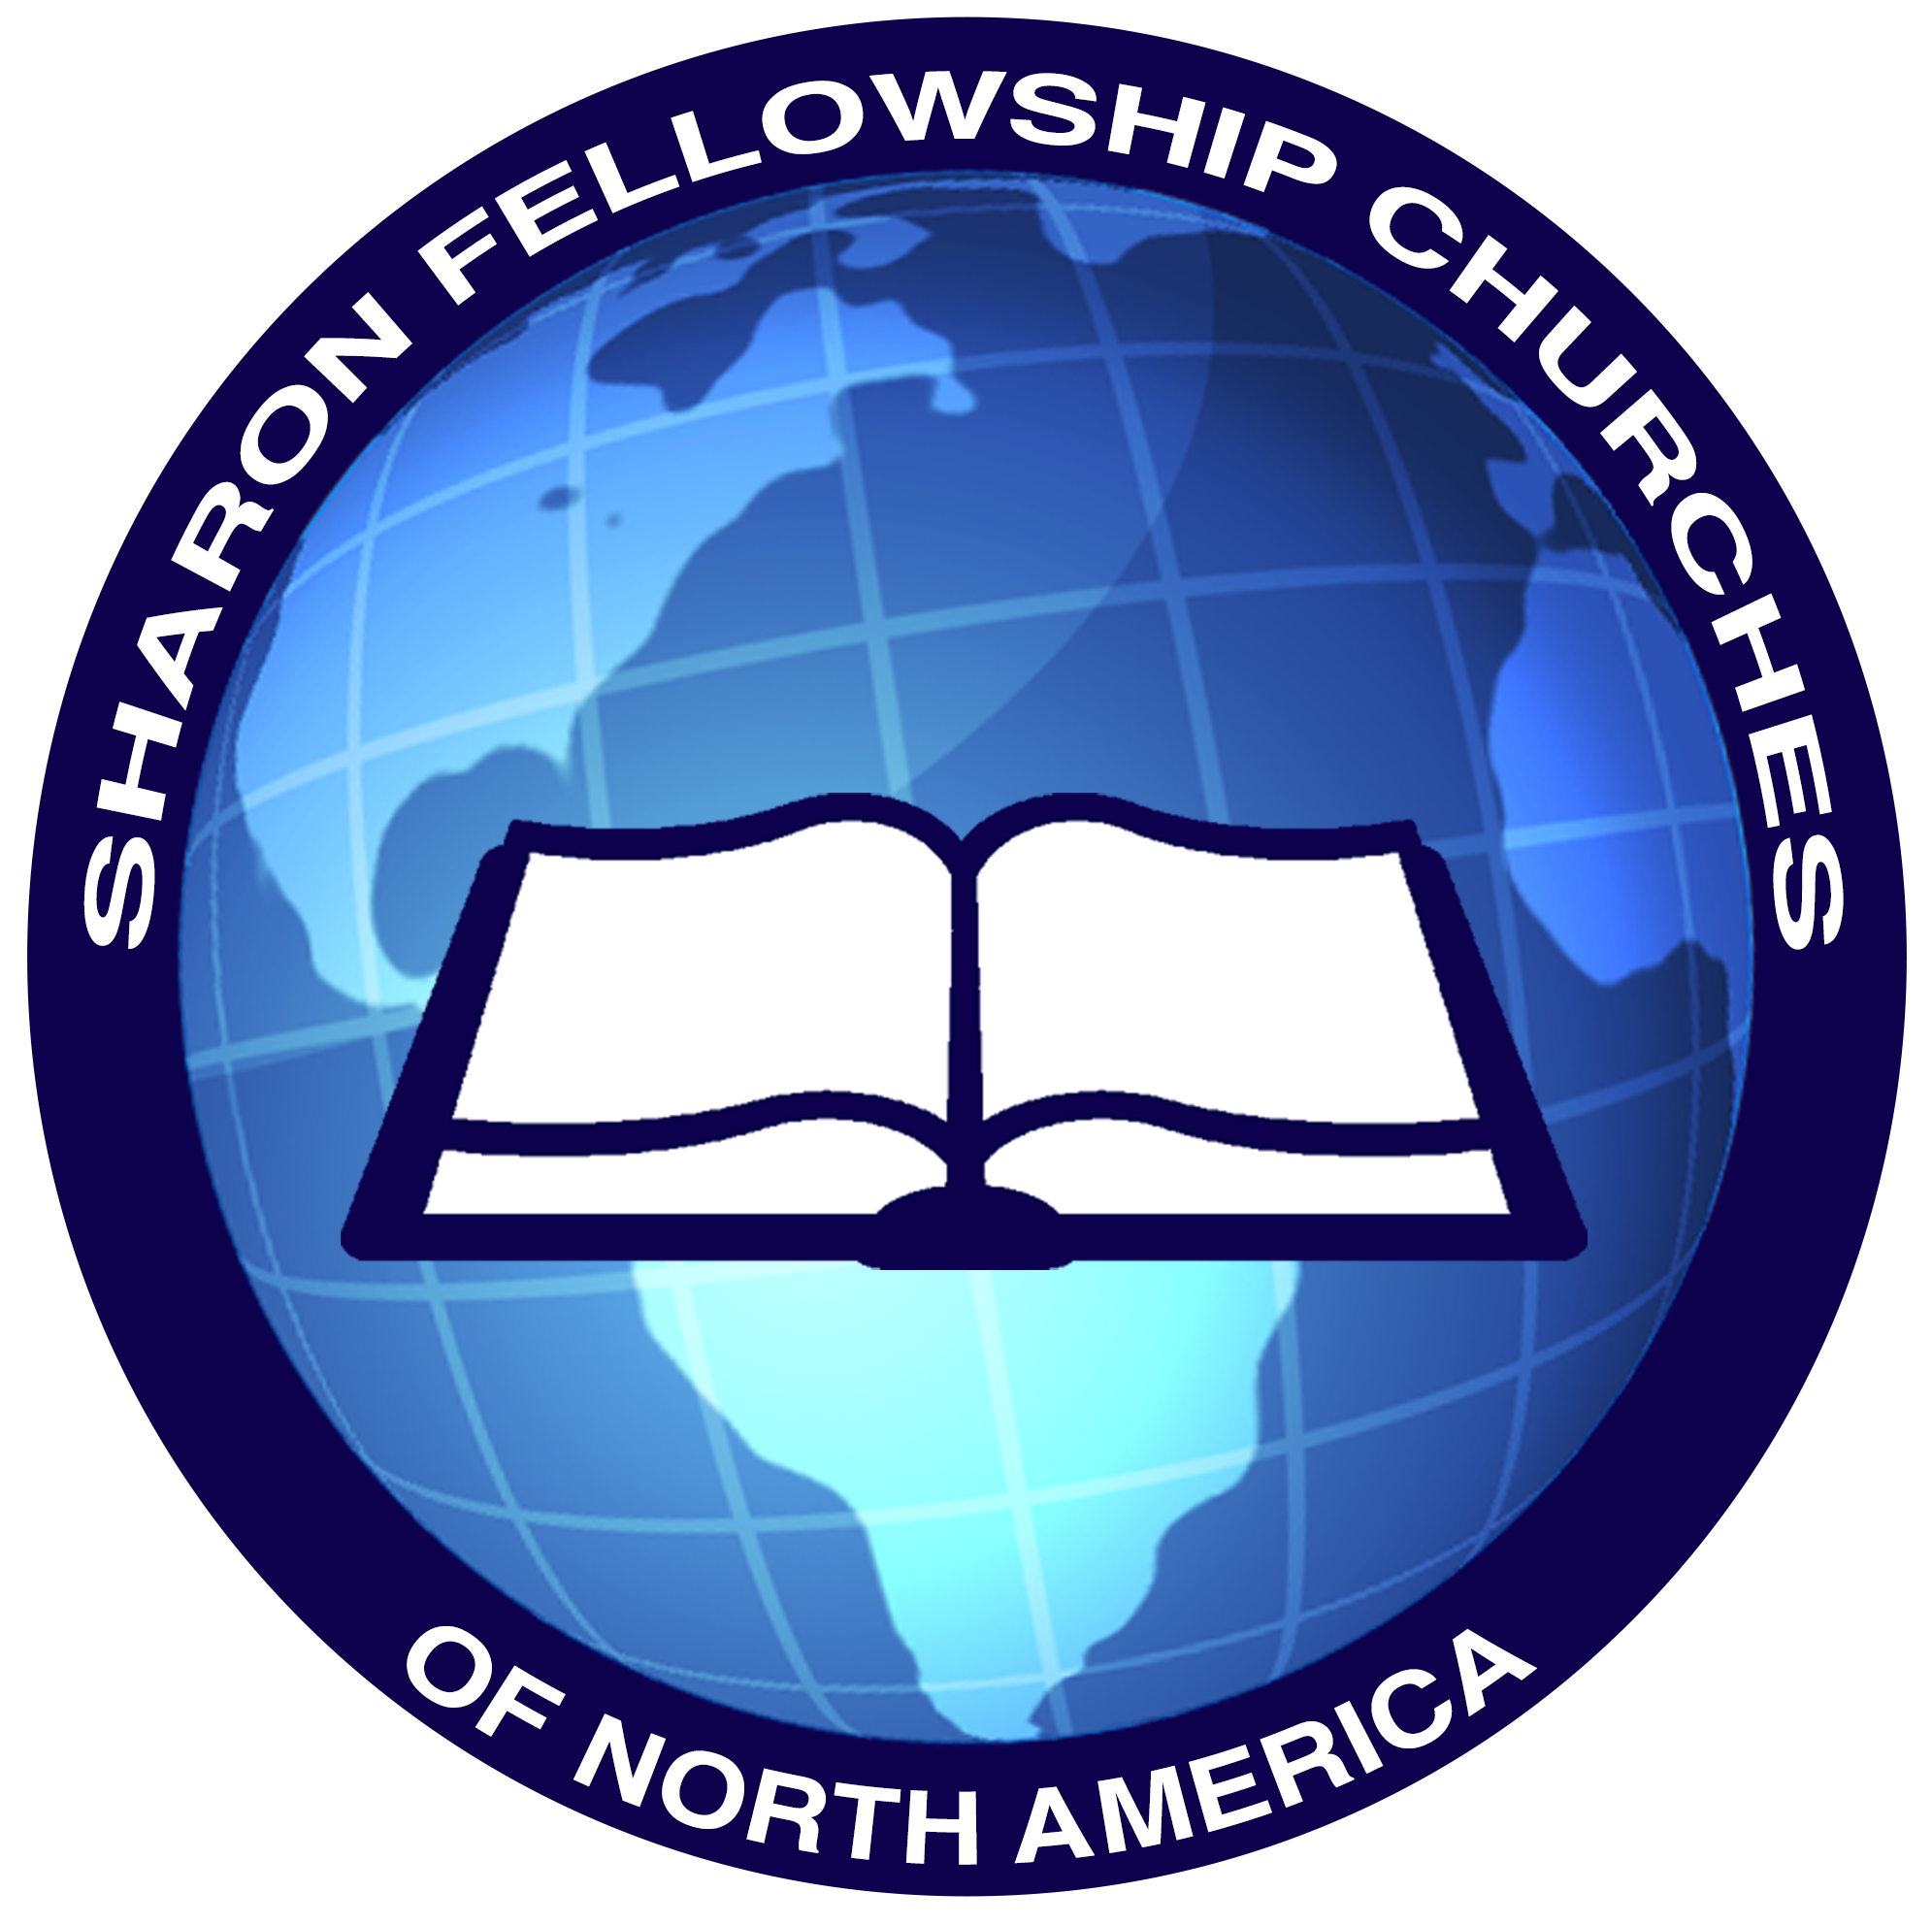 Sharon Fellowship Church of Kansas